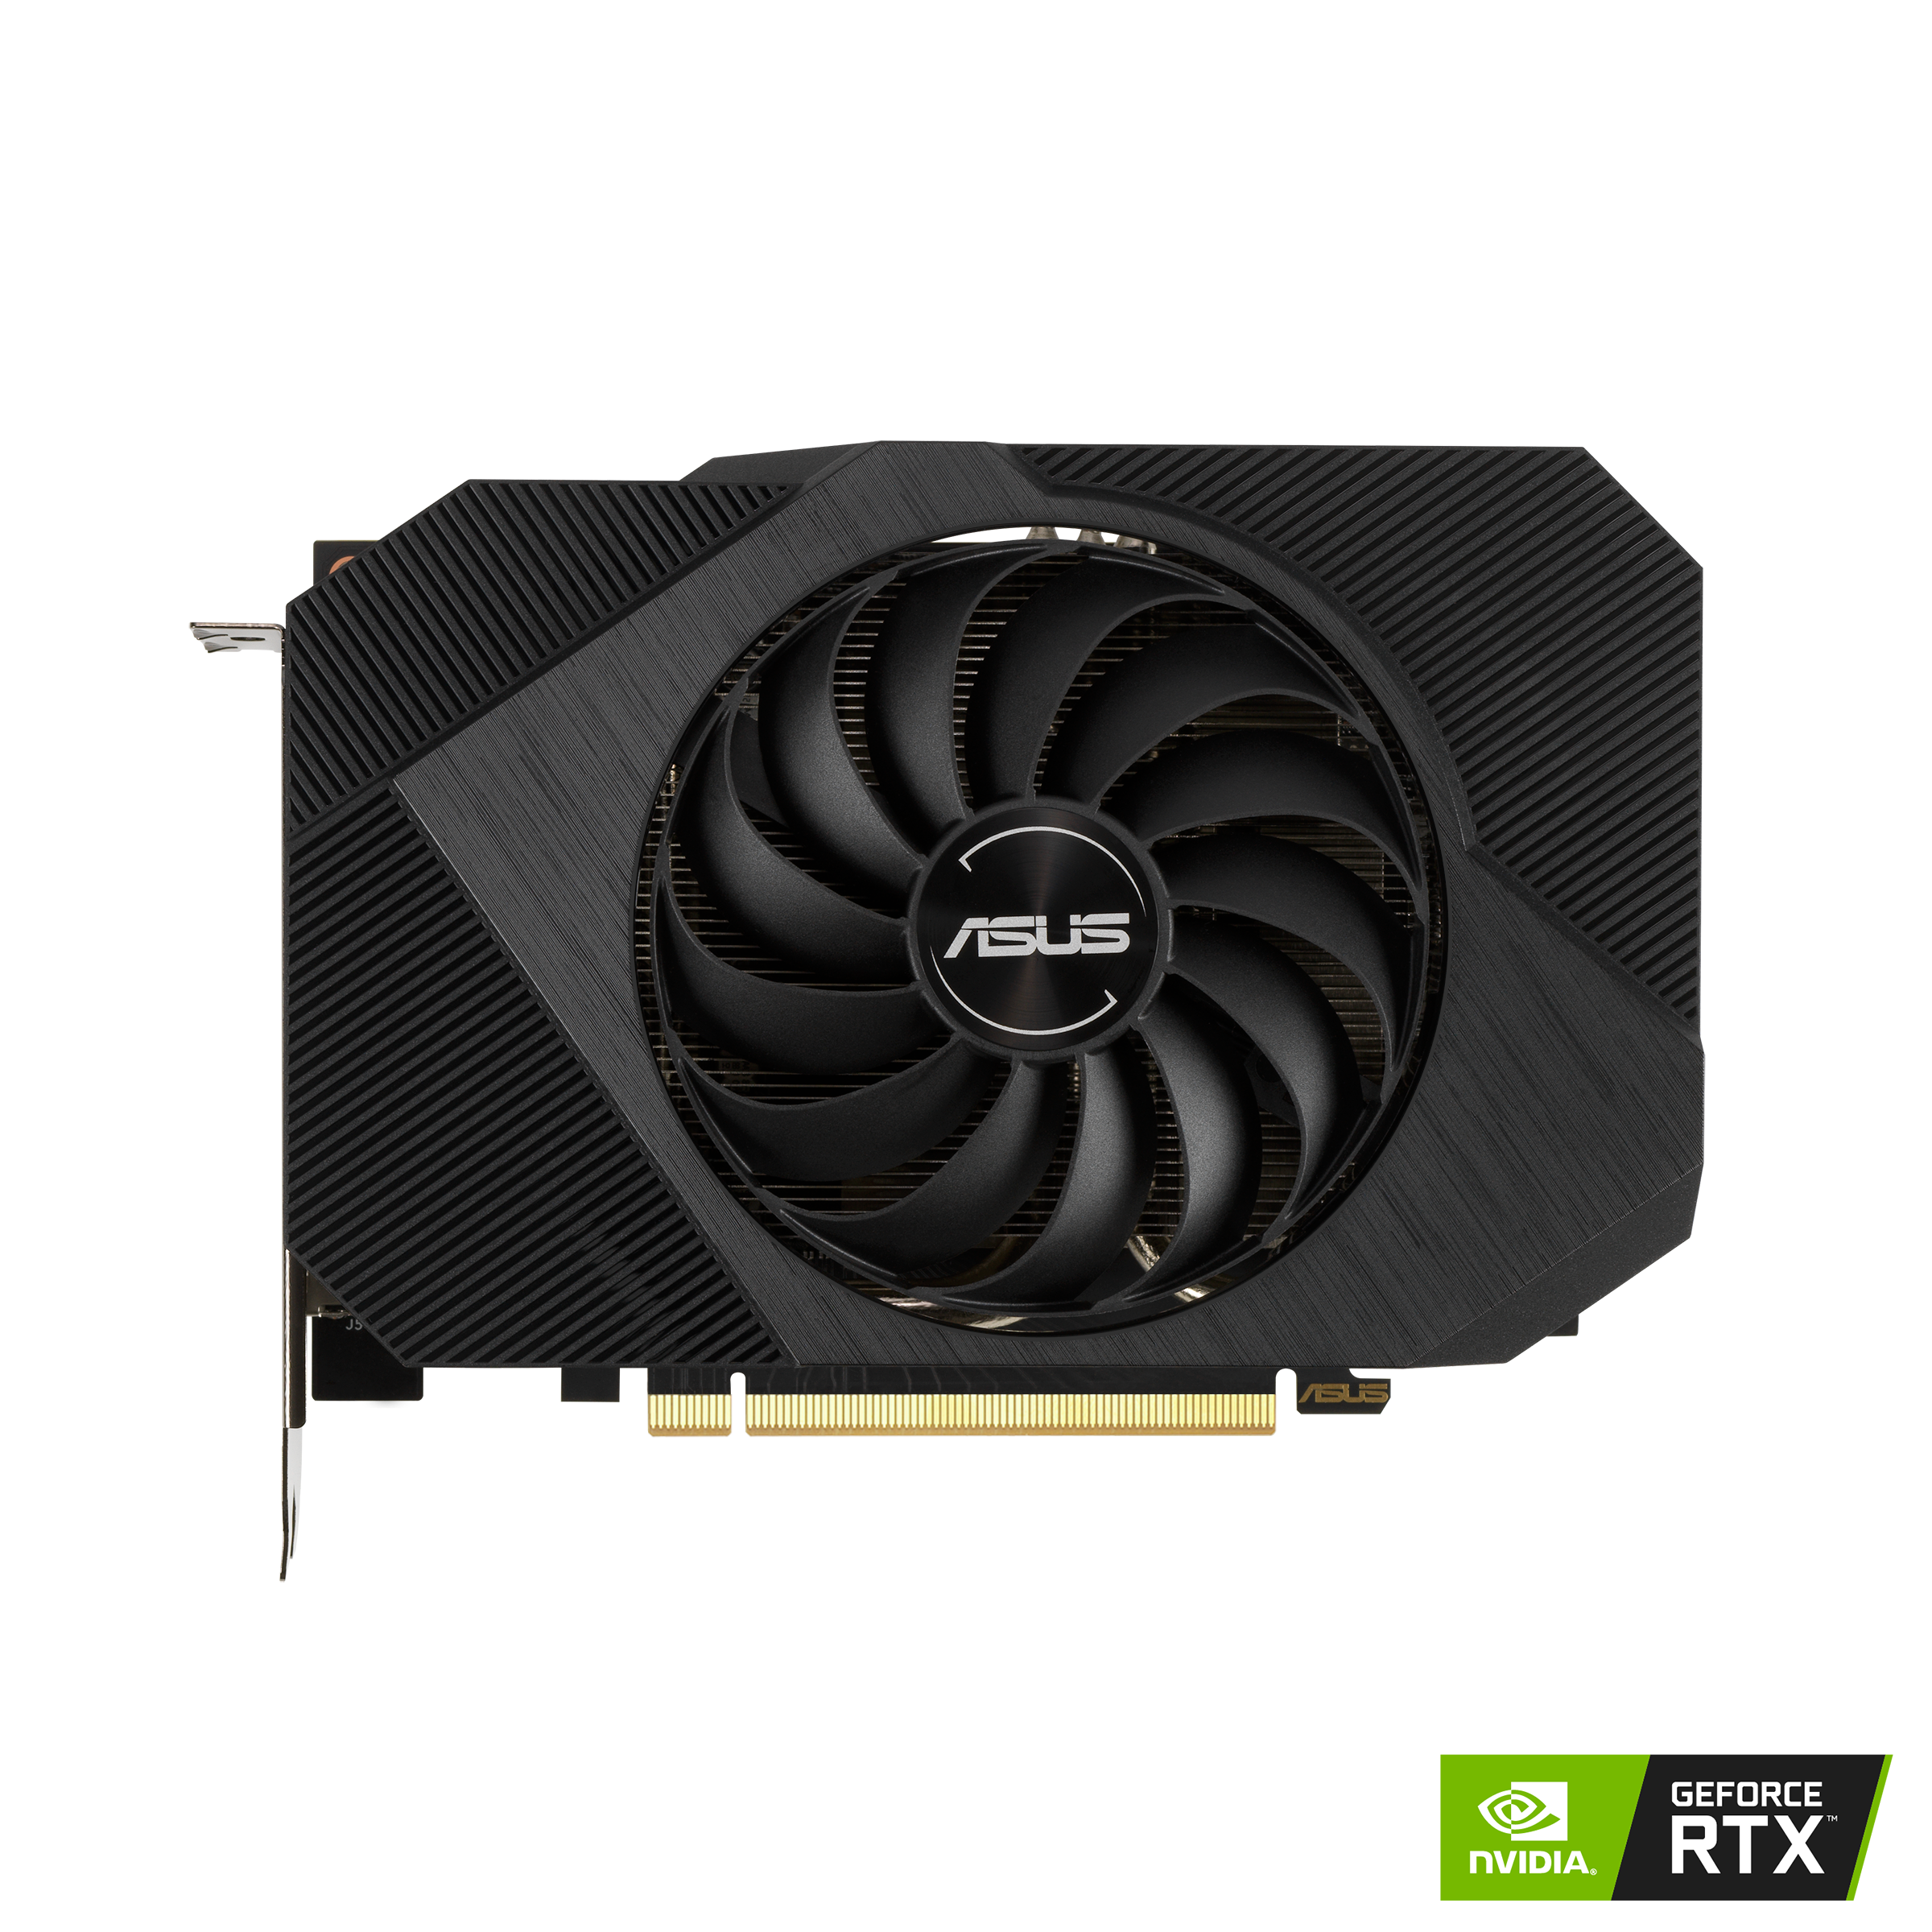 ASUS Phoenix GeForce RTX 3050 8GB GDDR6 | Graphics Card | ASUS Global